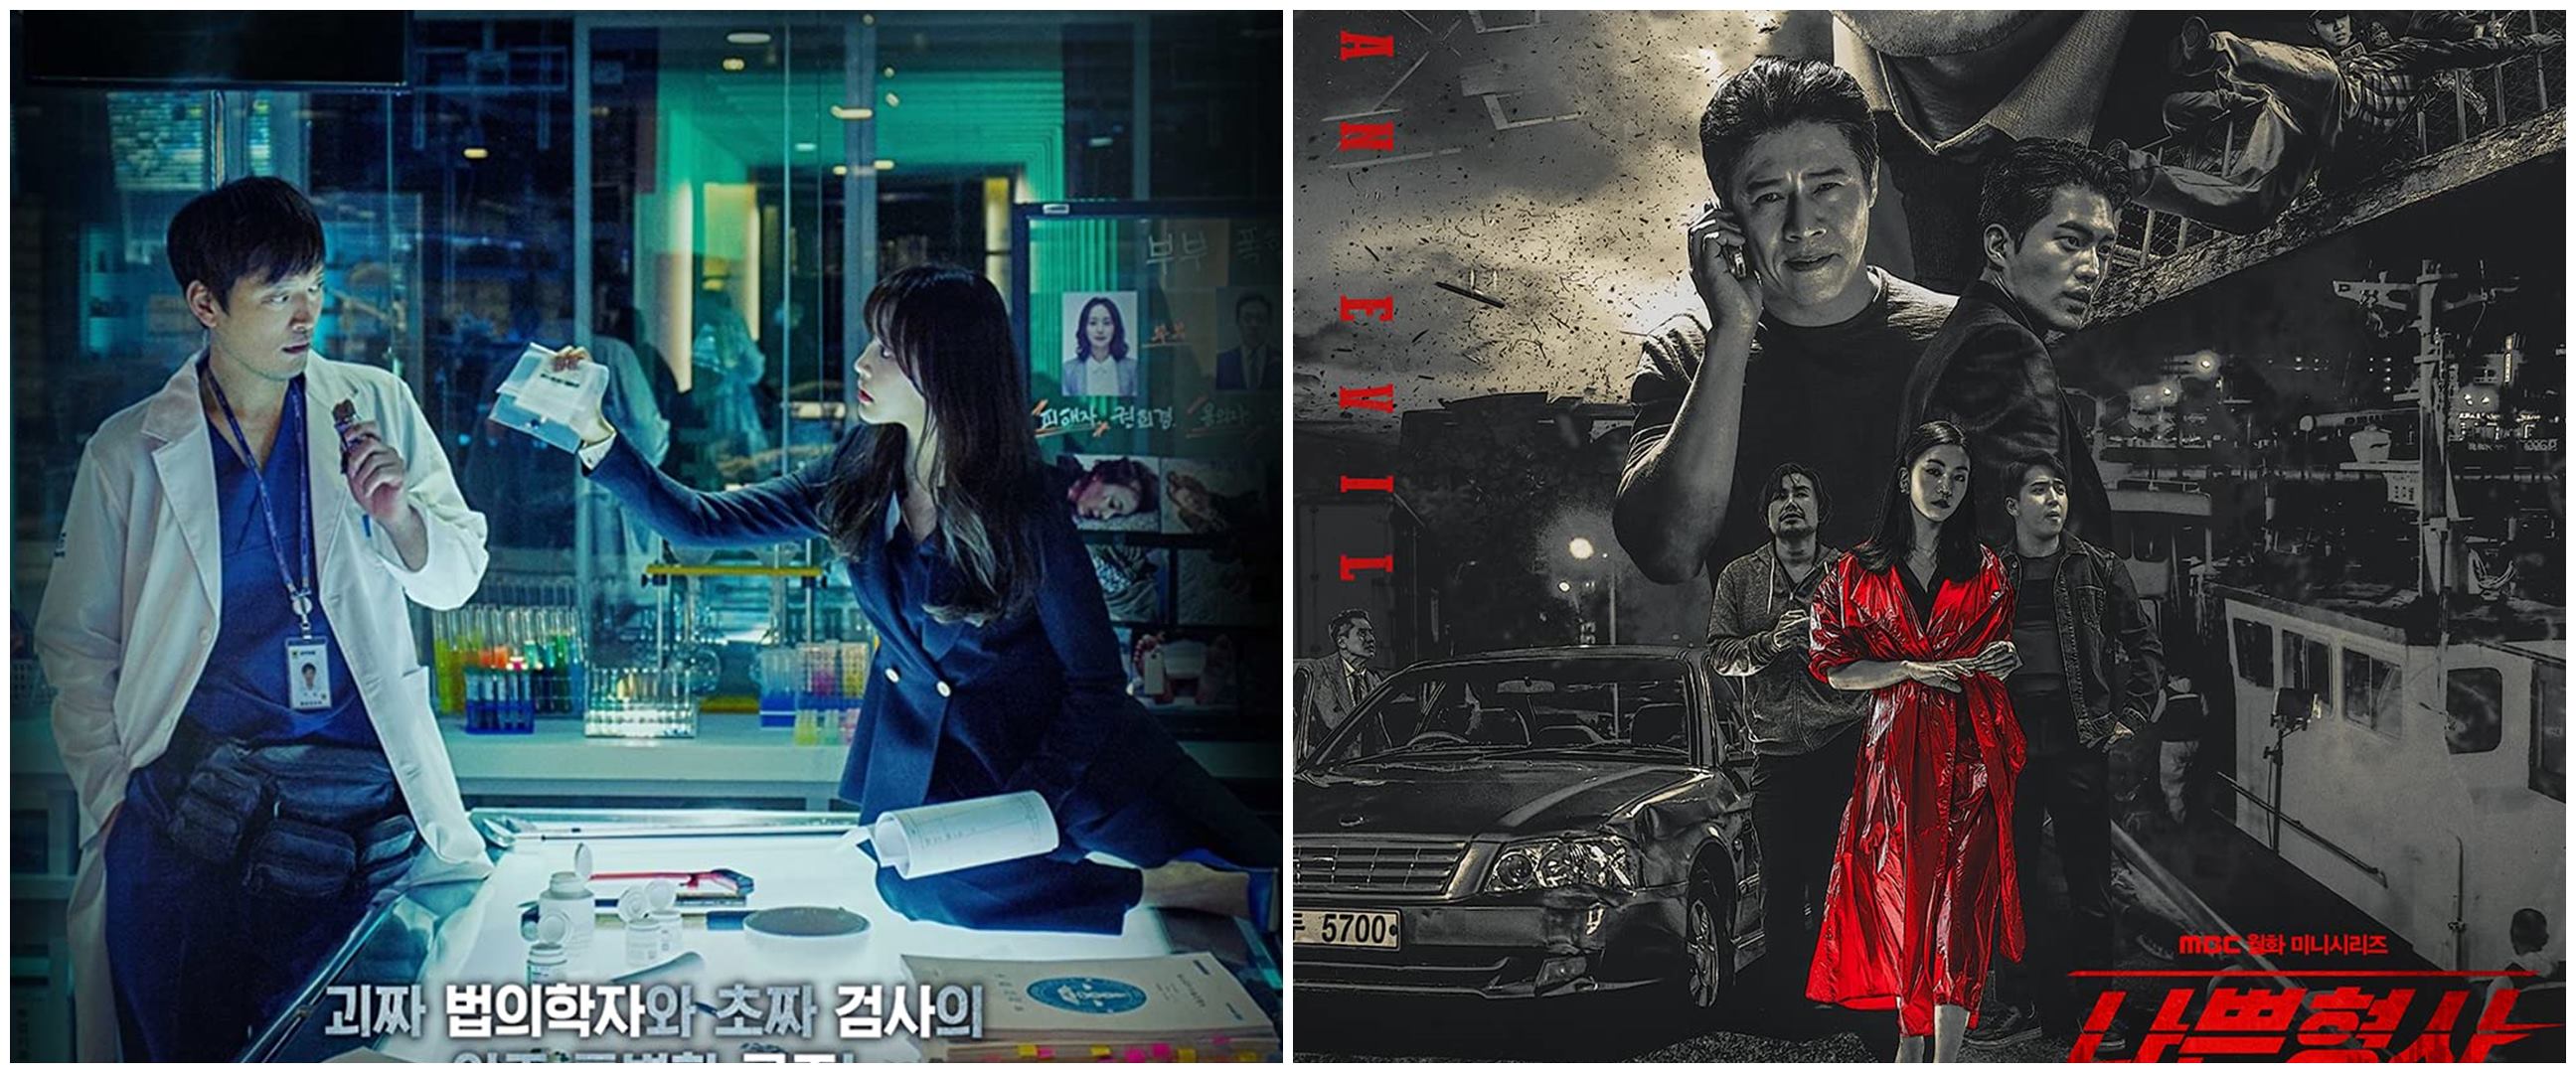 11 Drama Korea detektif, kisahkan pembunuhan penuh teka-teki rumit